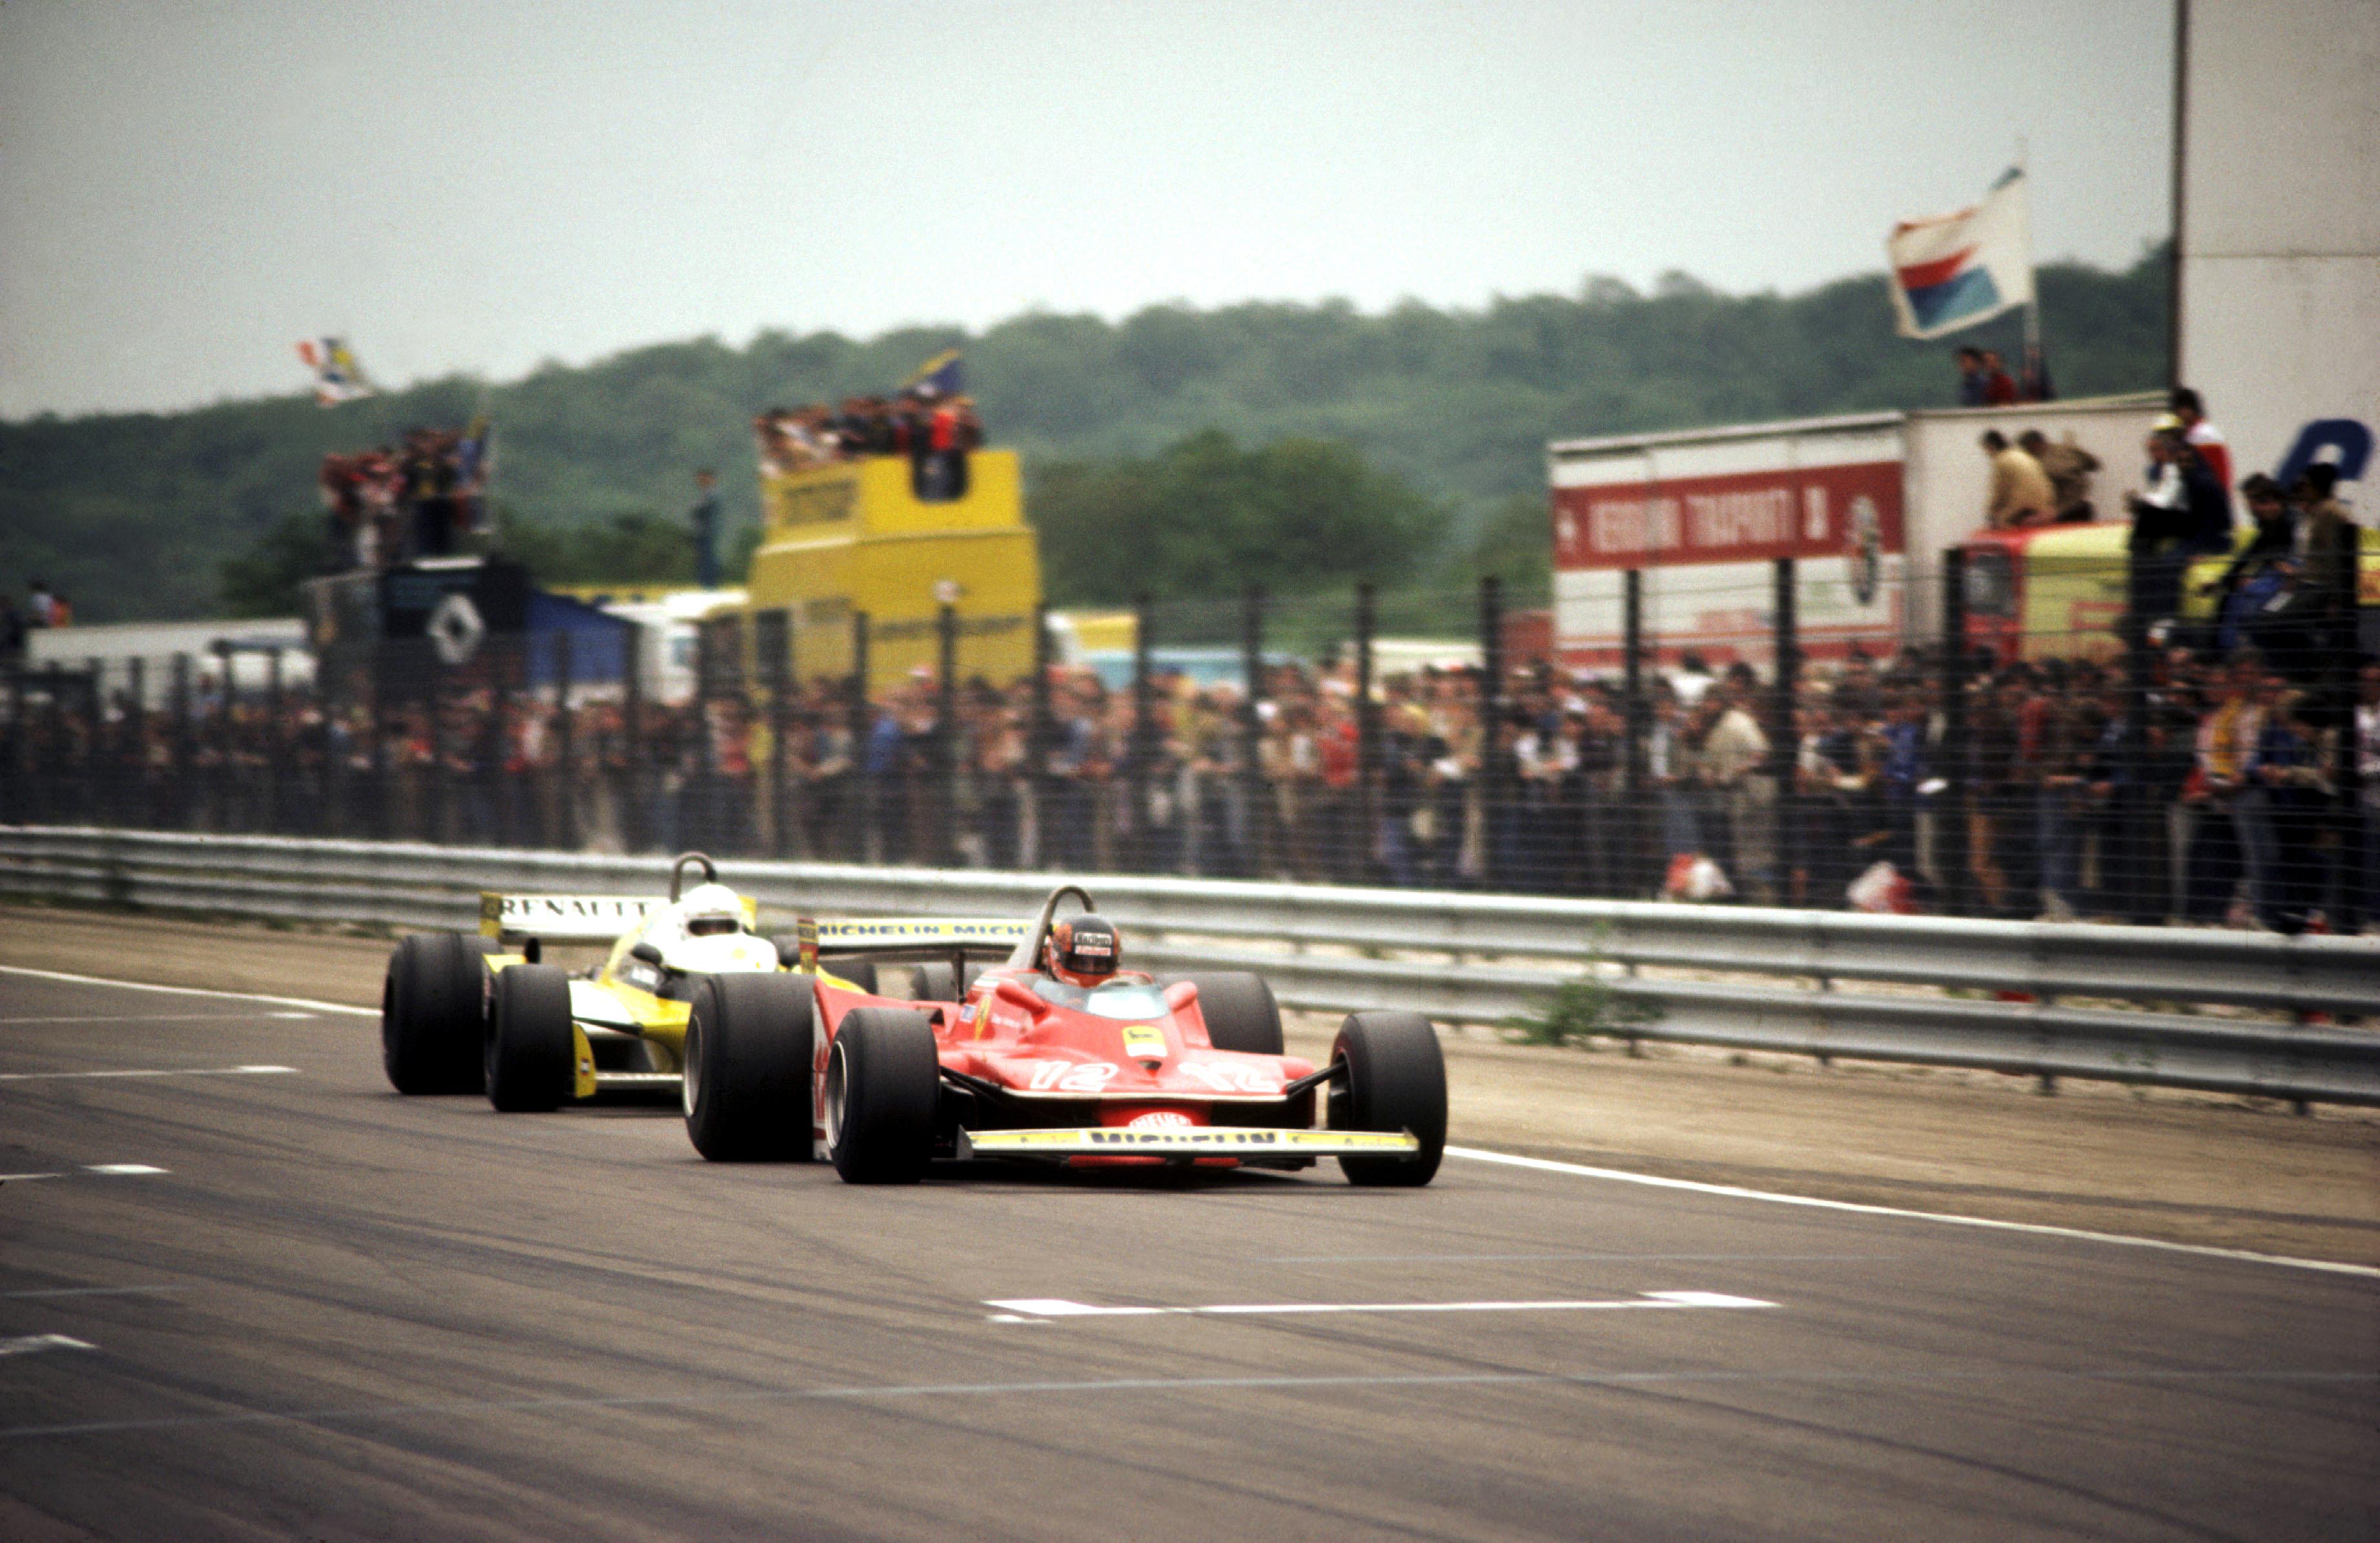 De dertigste sterfdag van Gilles Villeneuve